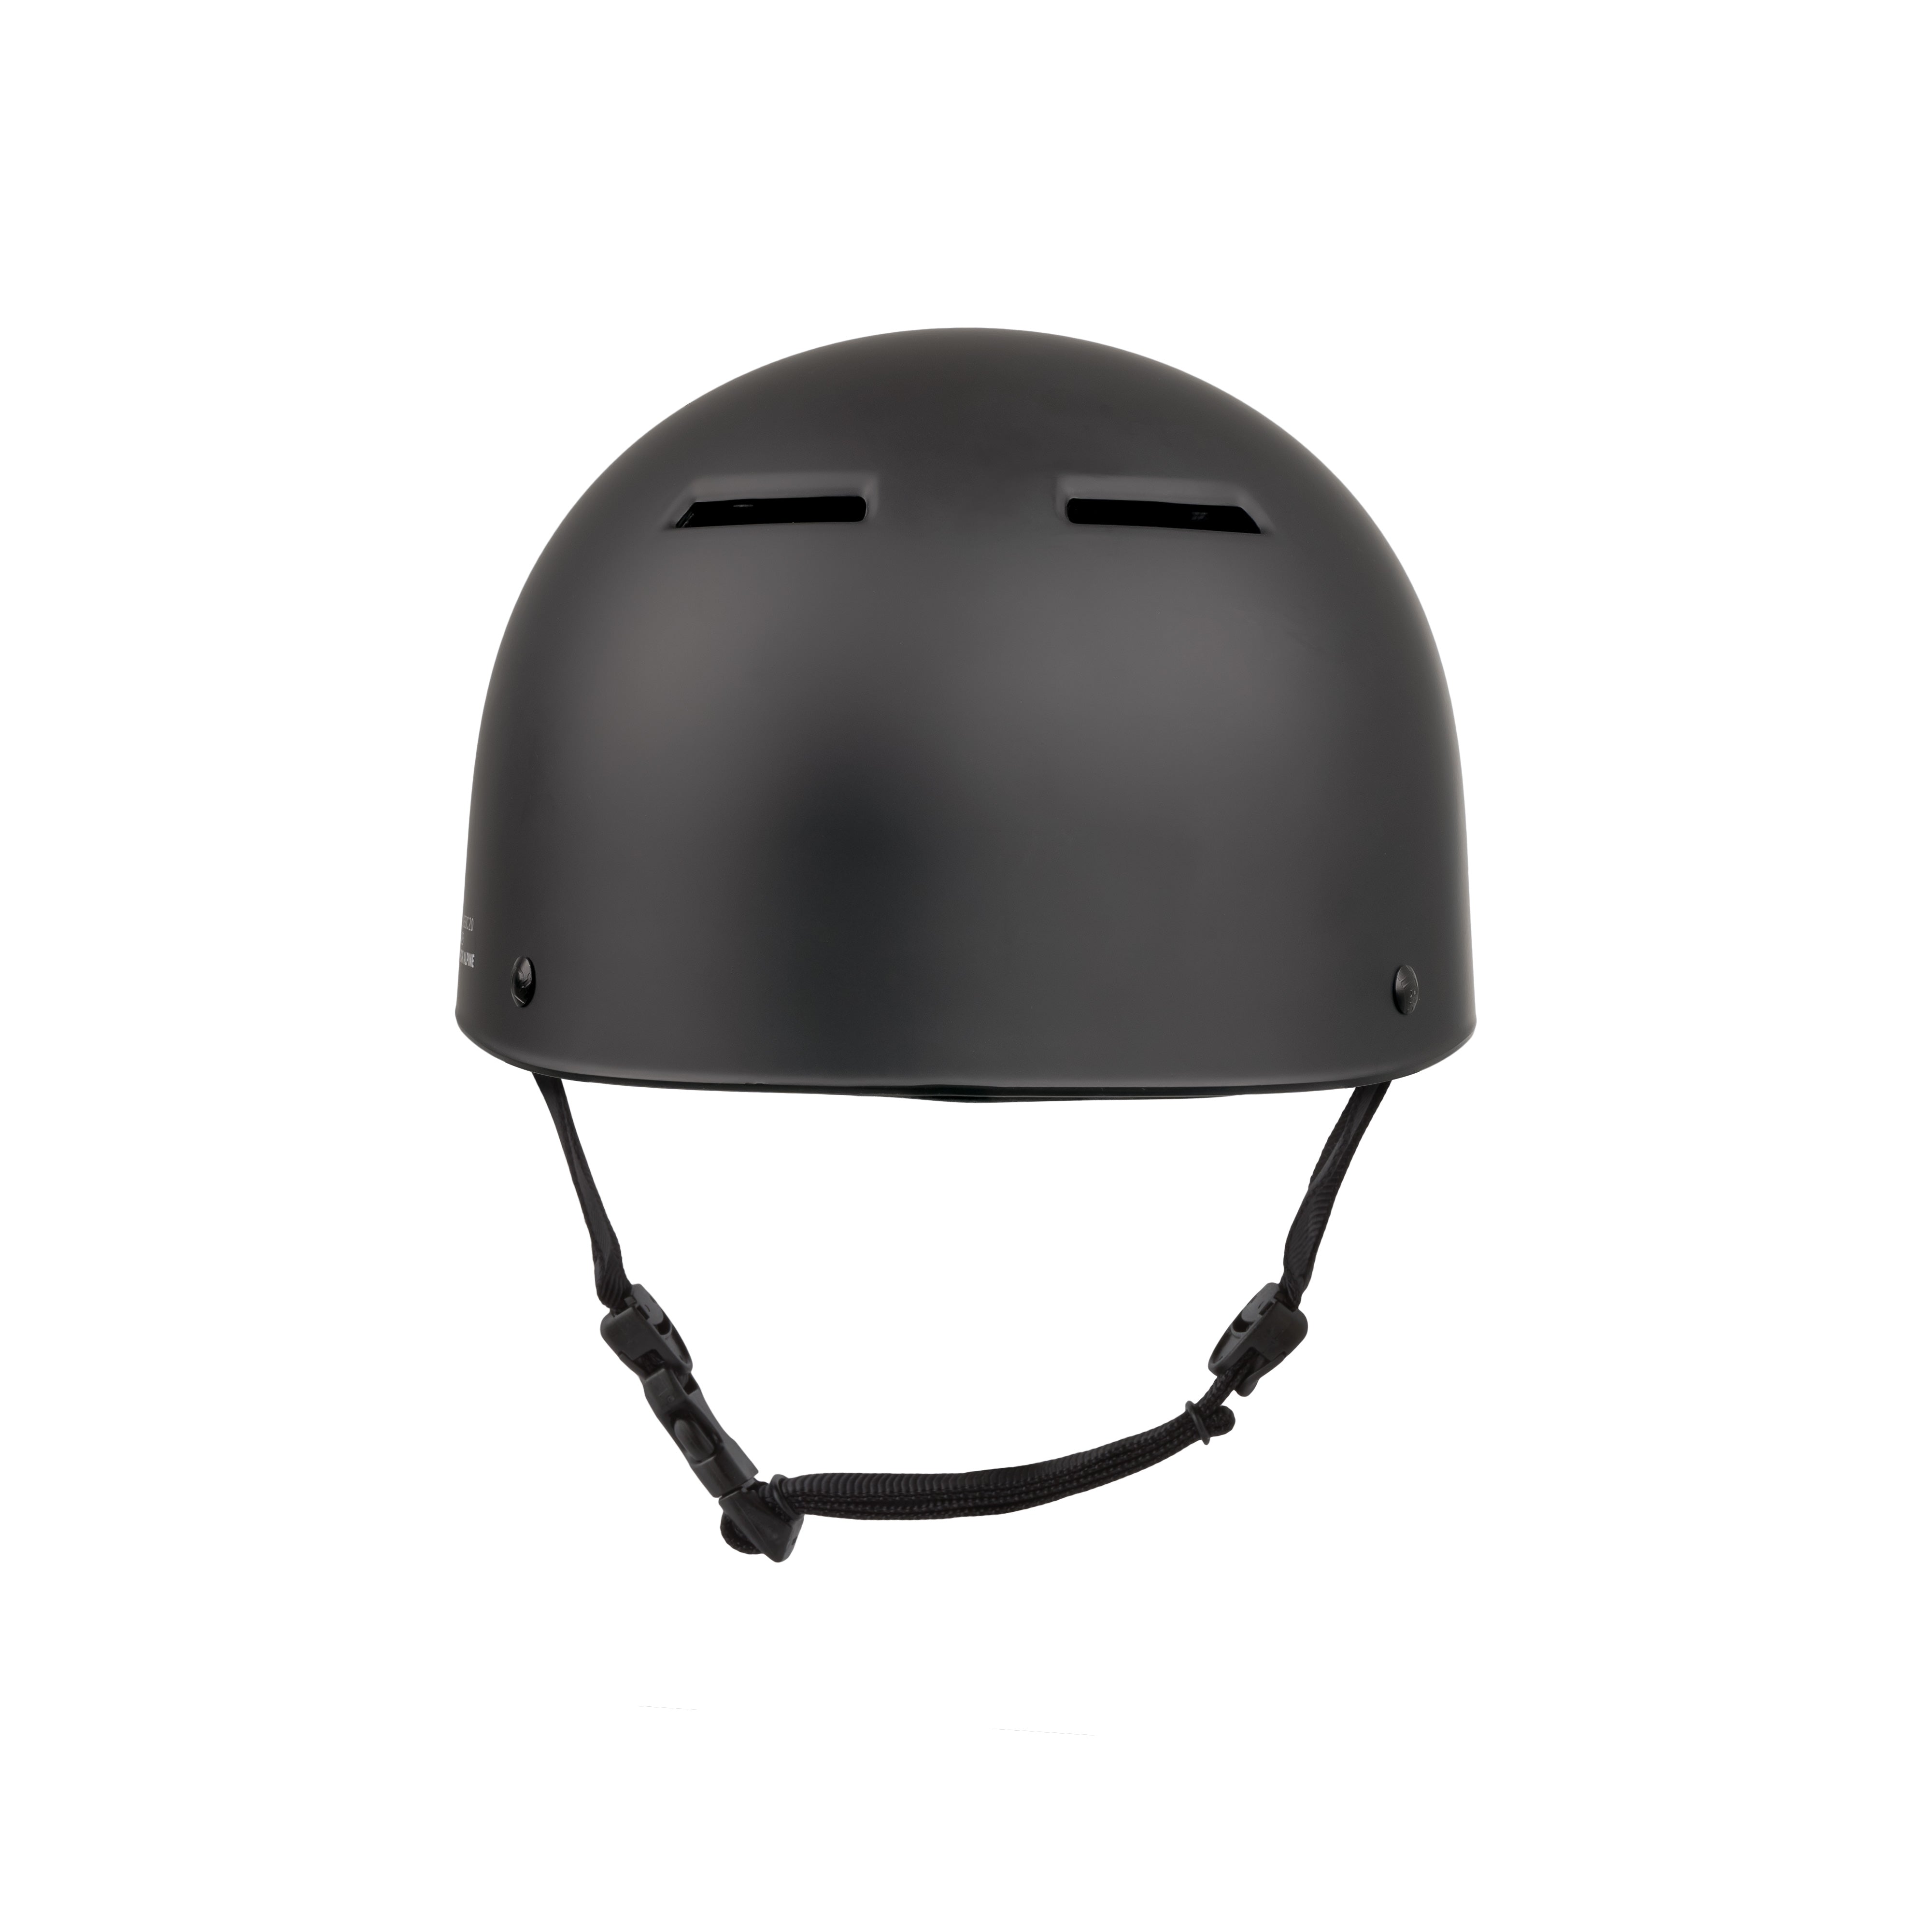 Sandbox Classic 2.0 Low Rider Water Sport Helmet